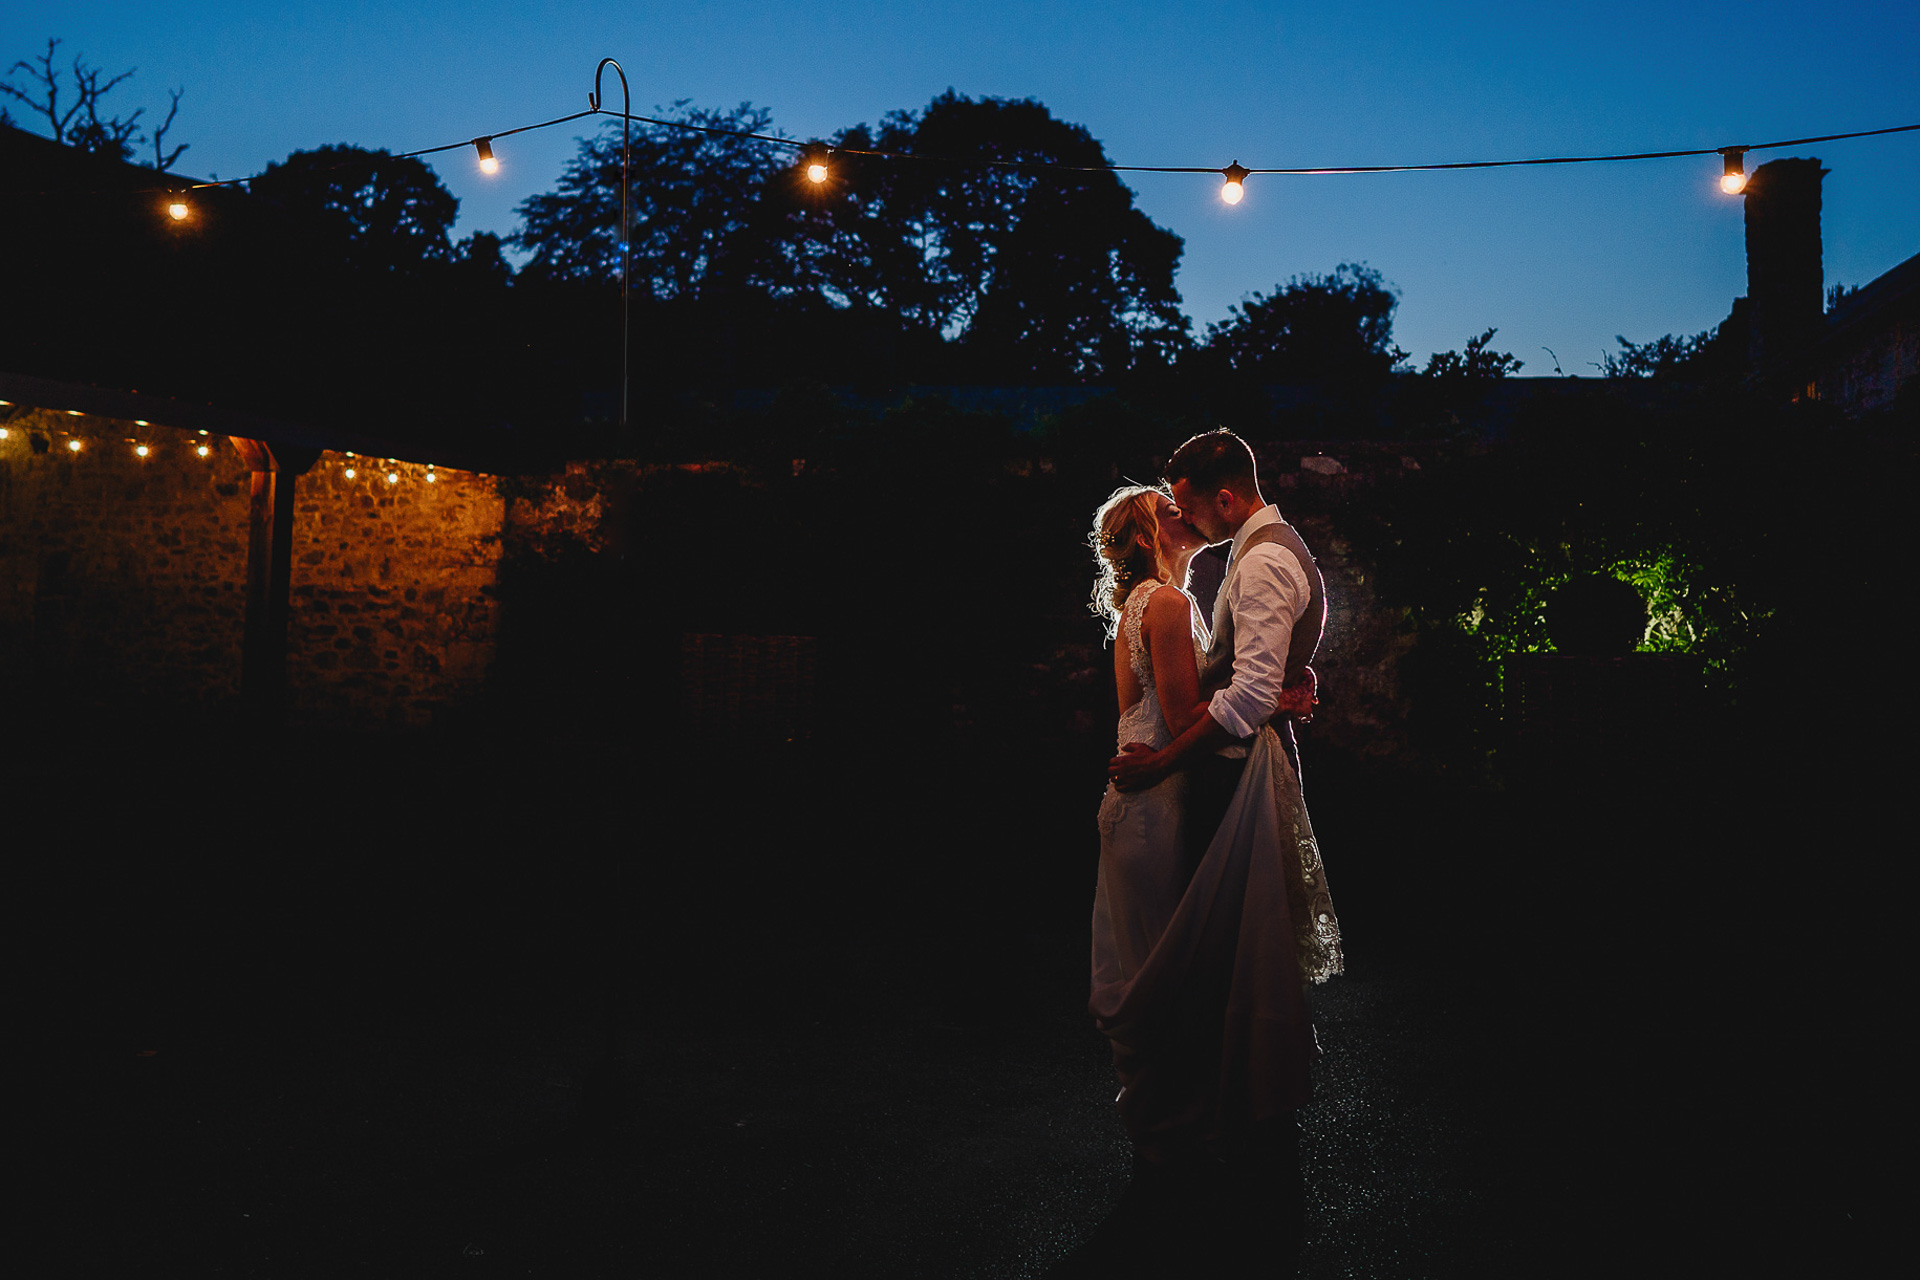 Bride and groom kissing underneath festoon lighting at night